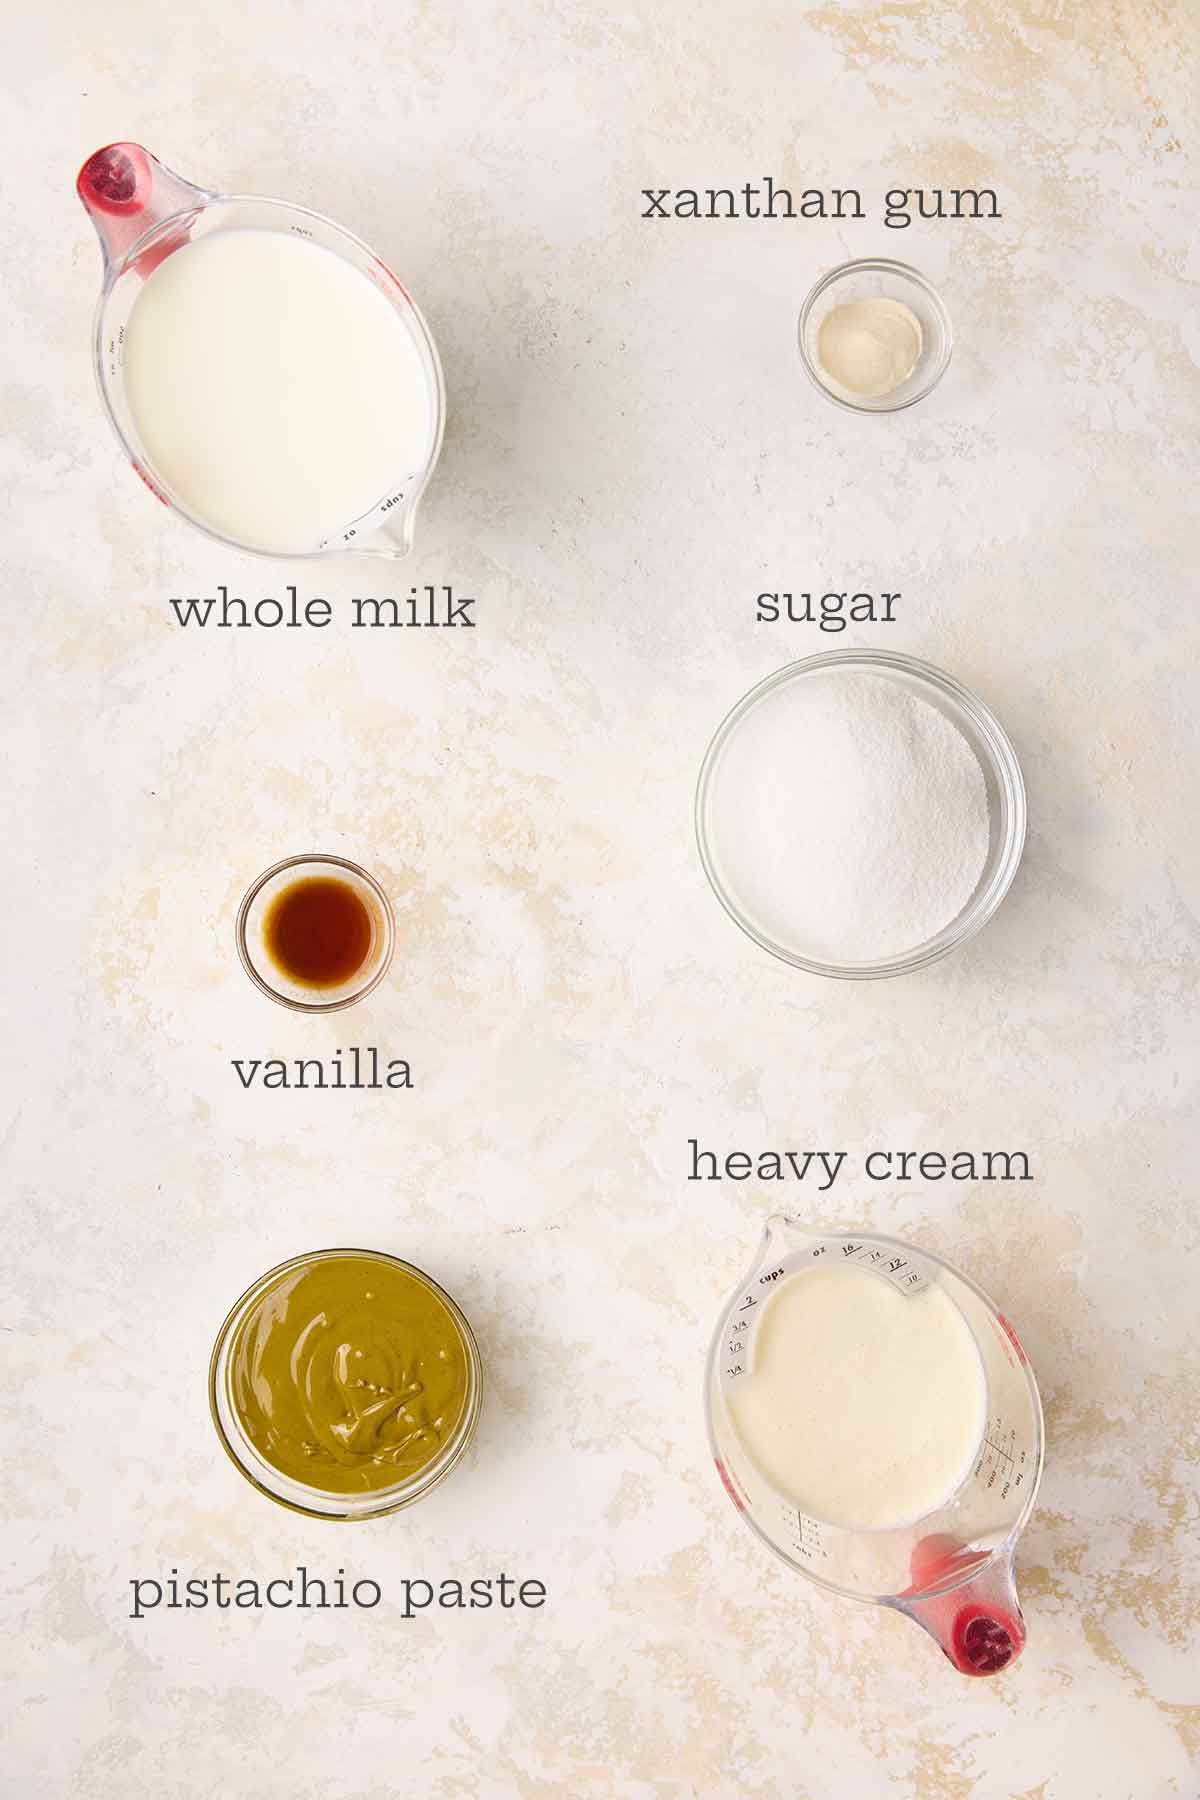 The ingredients for pistachio gelato: milk, cream, pistachio paste, sugar, xanthan gum, and vanilla extract.